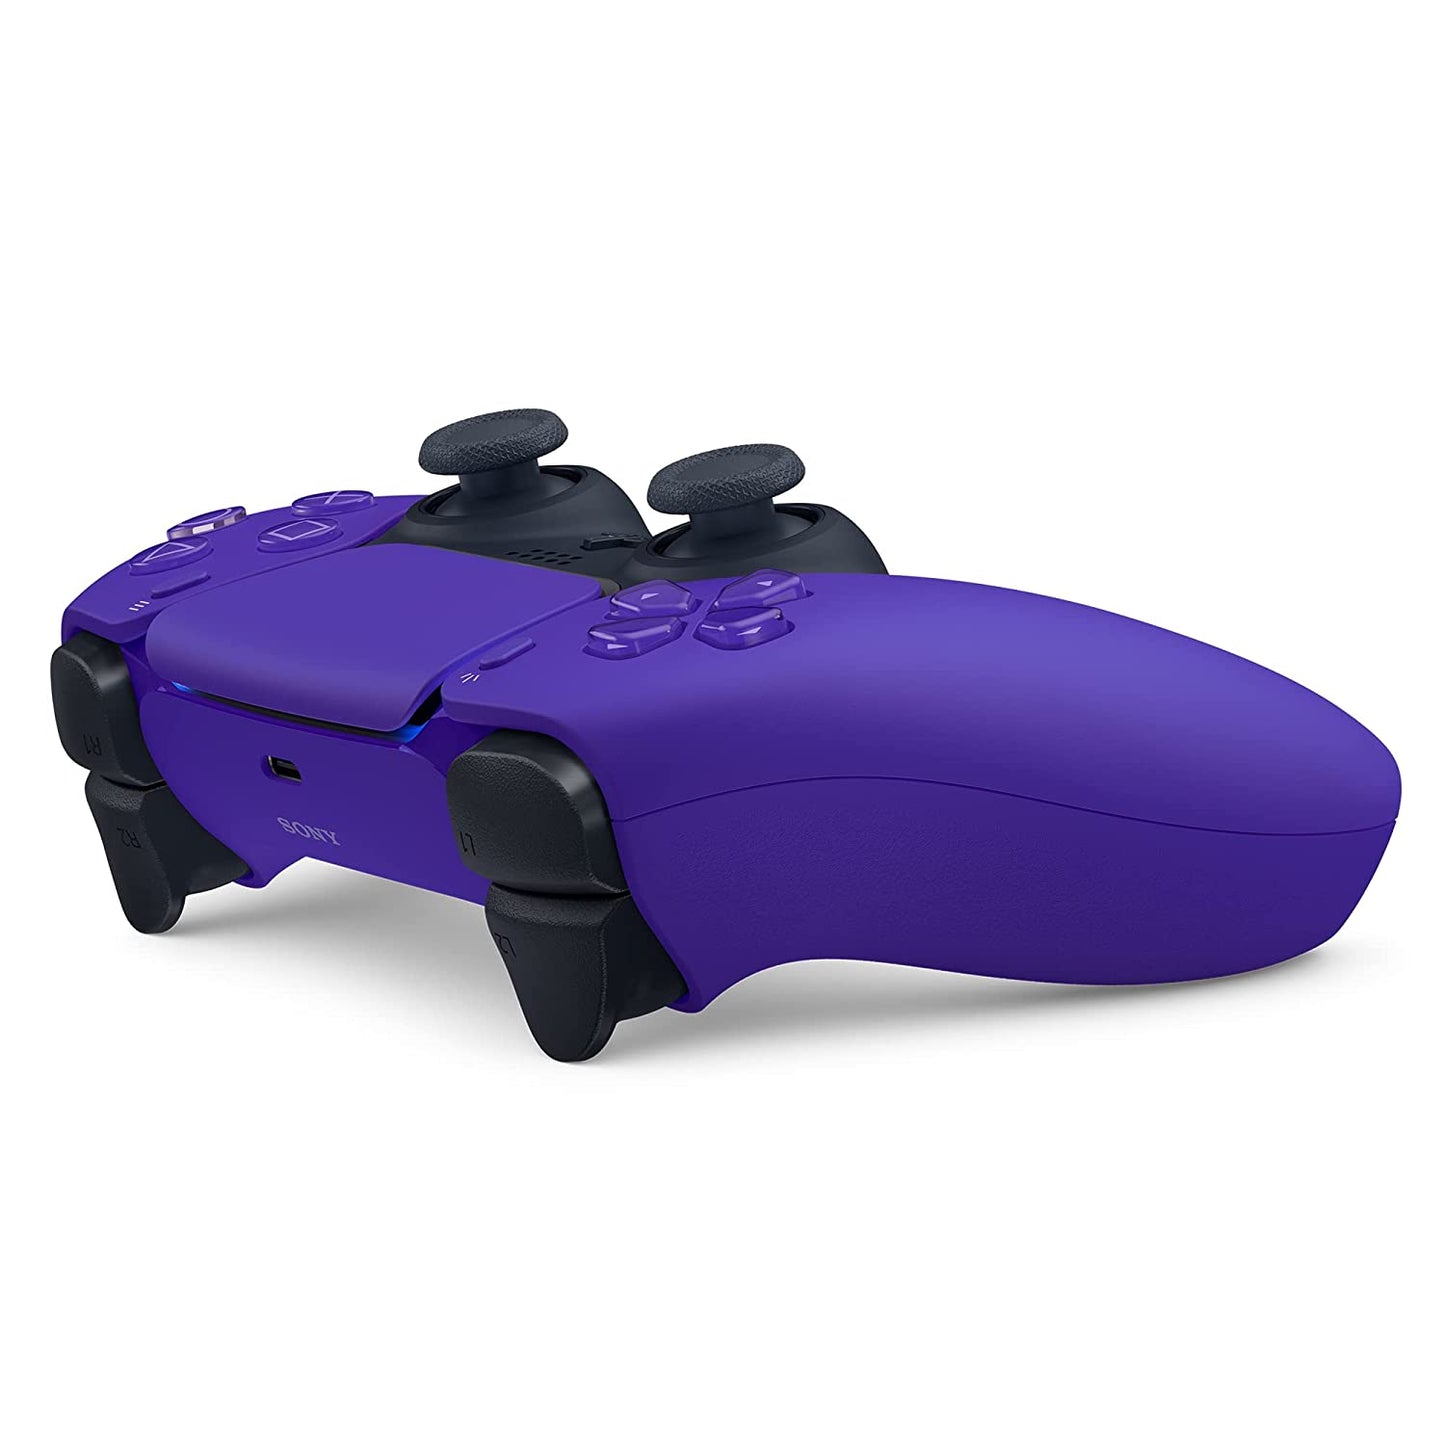 PS5 DualSense Wireless Controller – Galactic Purple